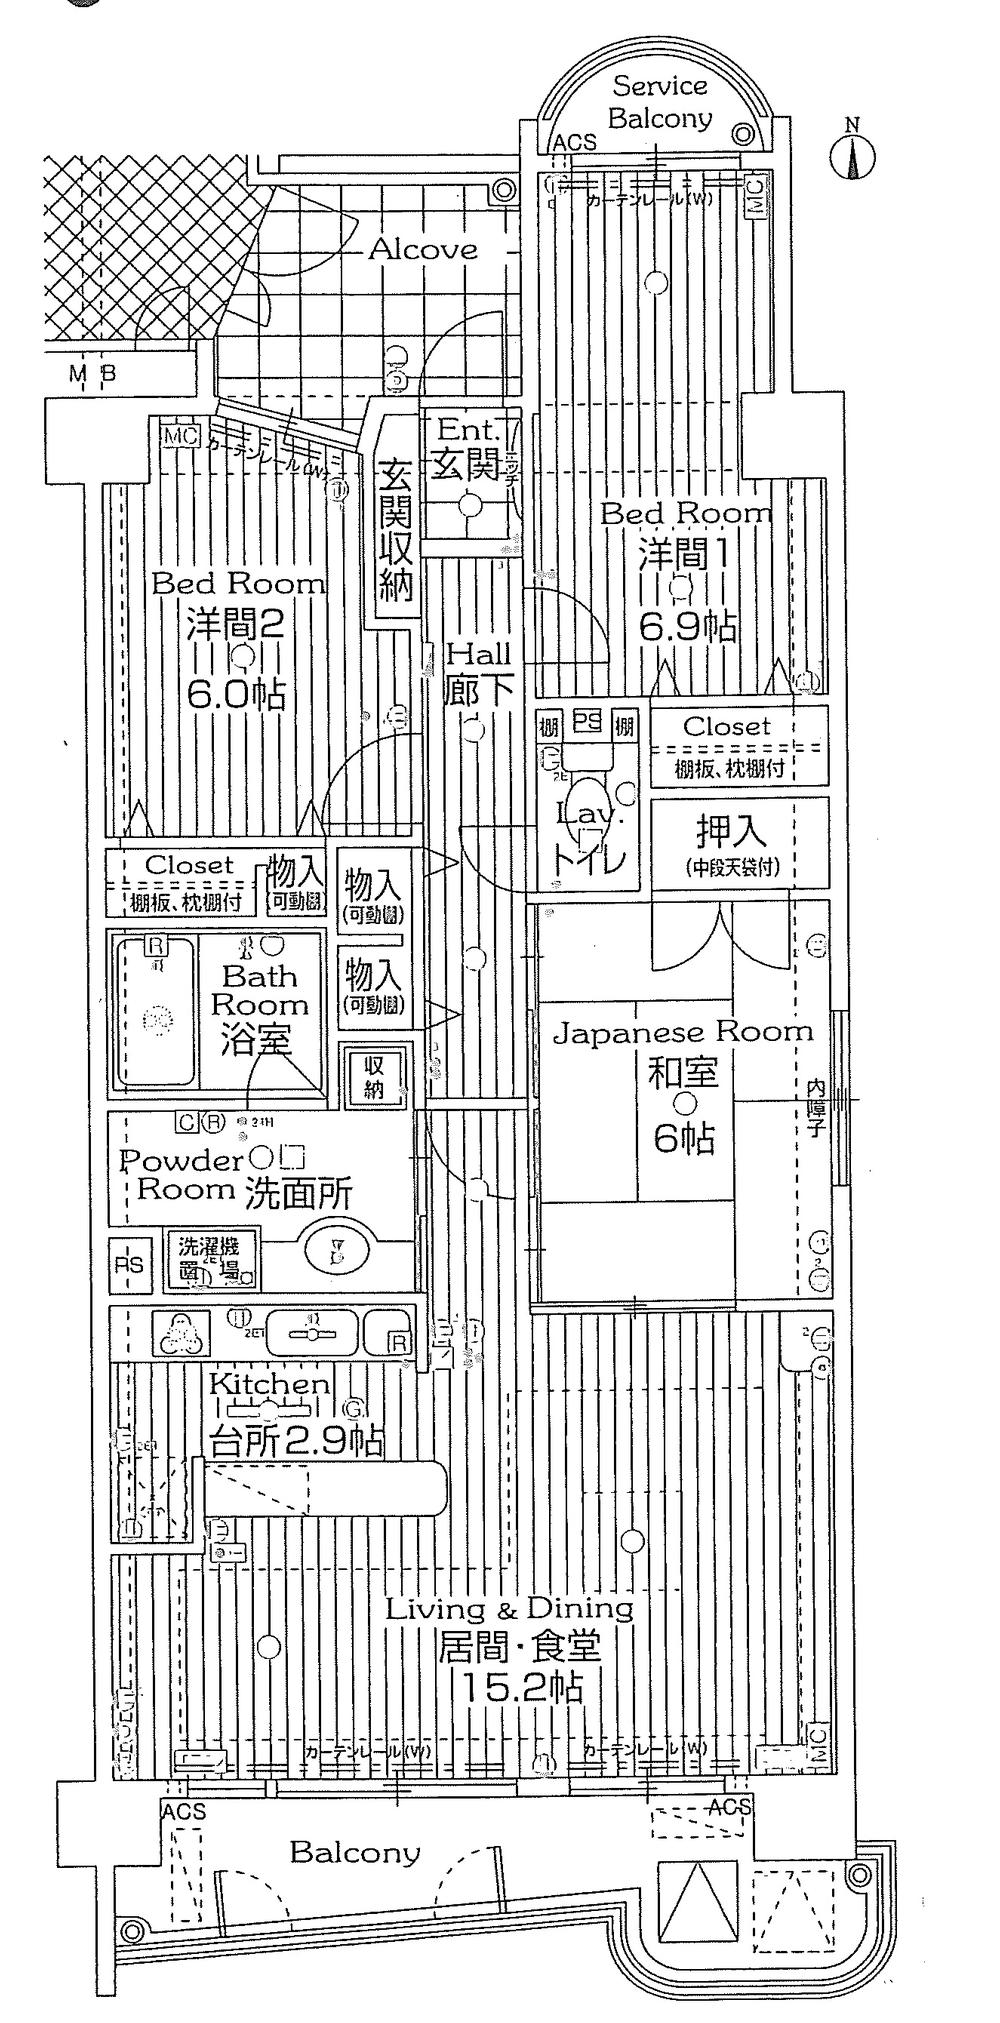 Floor plan. 3LDK, Price 23.2 million yen, Footprint 82.6 sq m , Balcony area 9 sq m